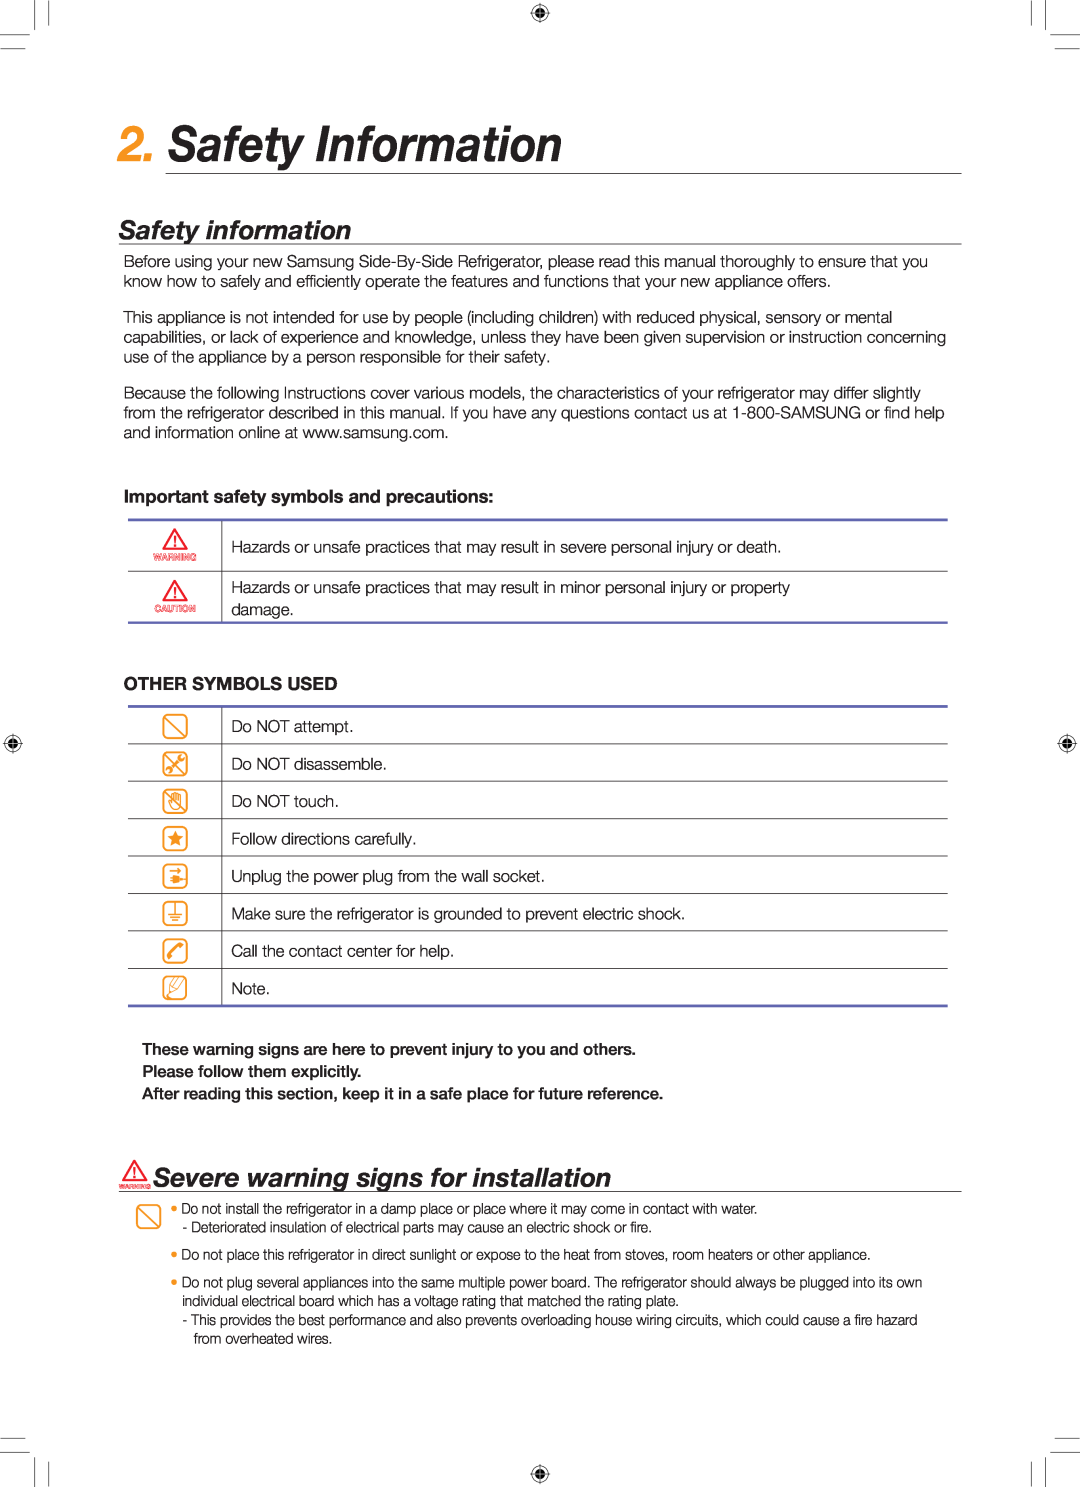 Samsung RS261MD** quick start Safety Information, Safety information, WARNING Severe warning signs for installation 